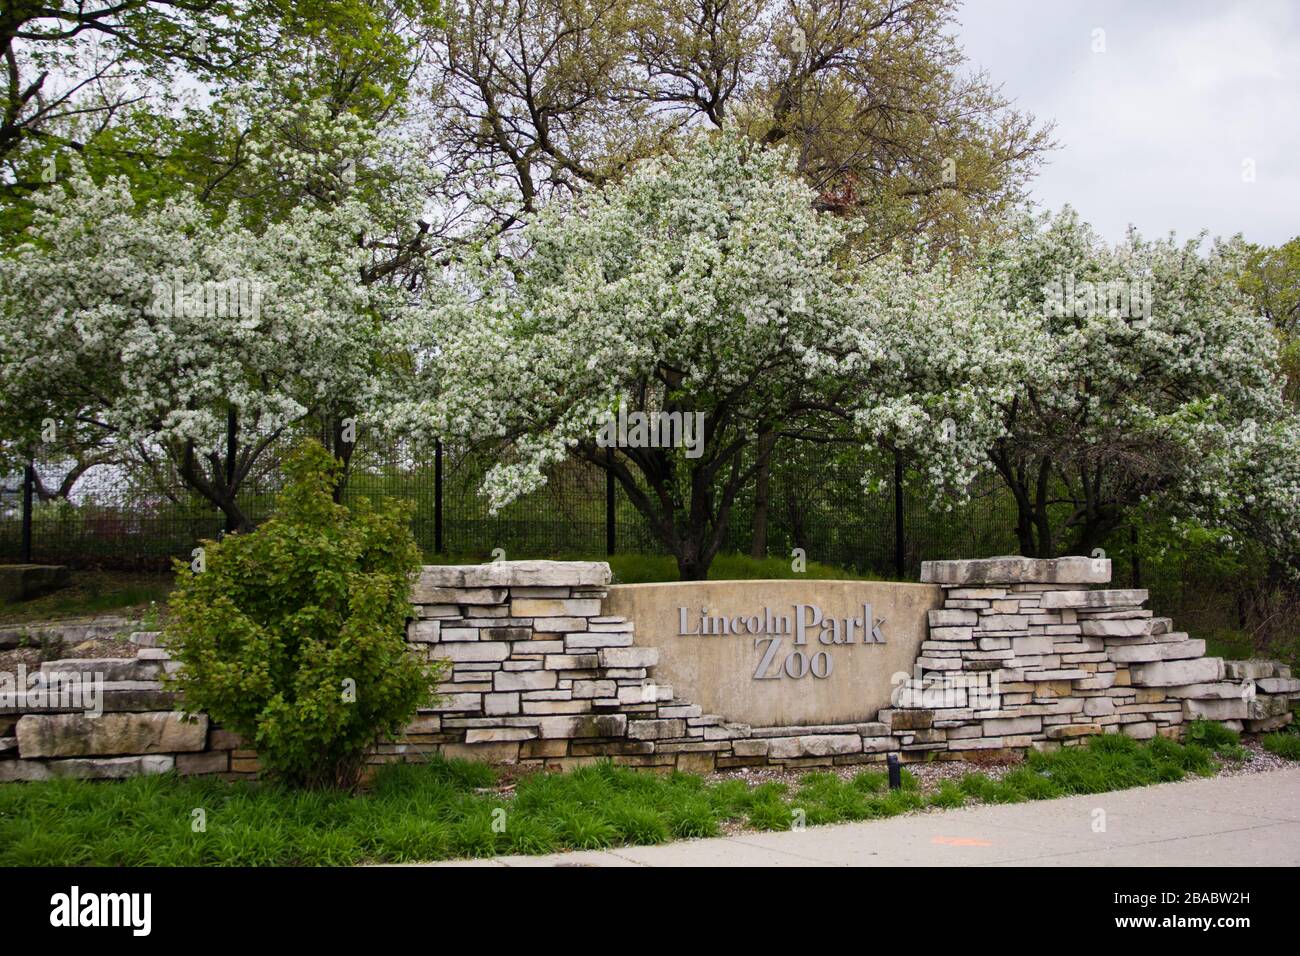 Inscription of Lincoln Park Zoo, Lincoln Park, Chicago, Illinois, USA Stock Photo